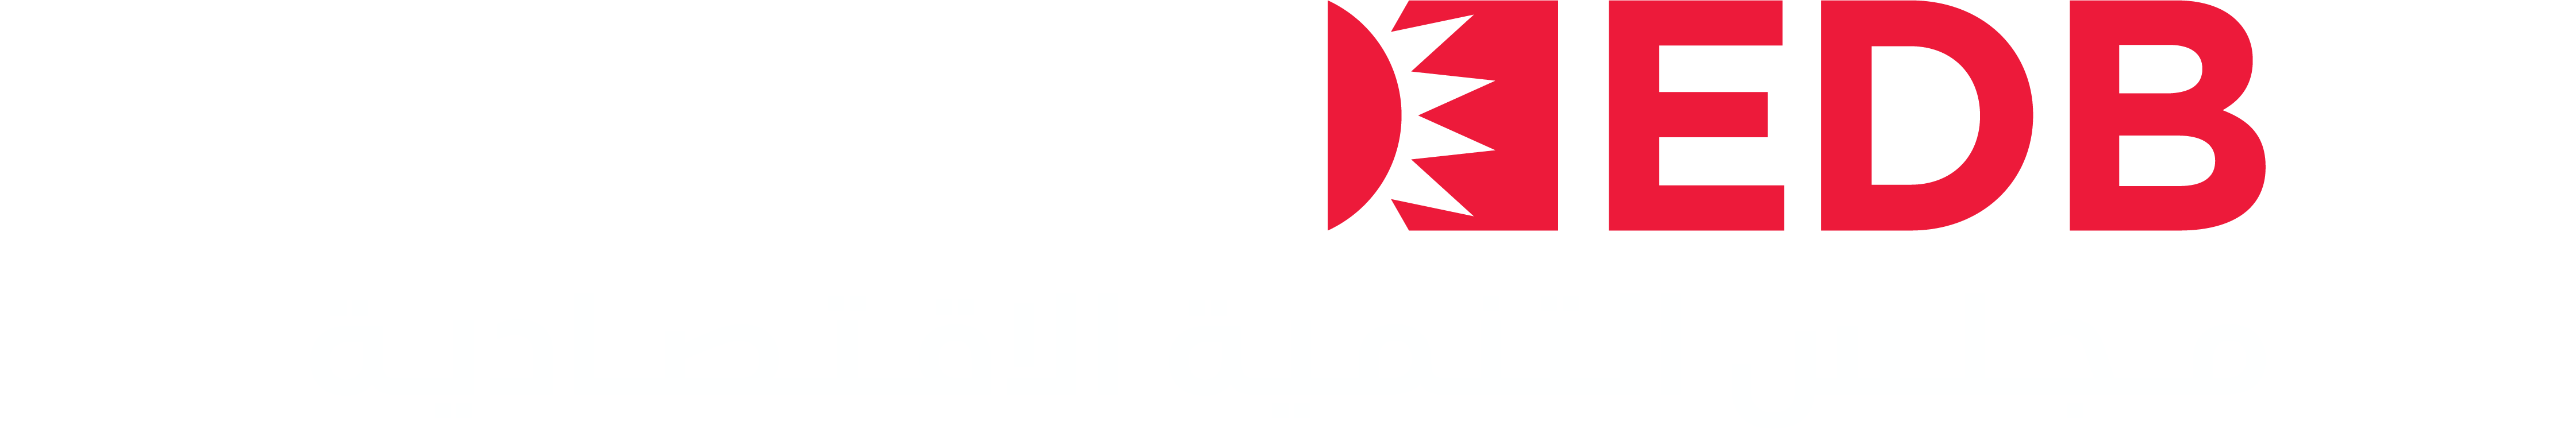 Invest in Bahrain